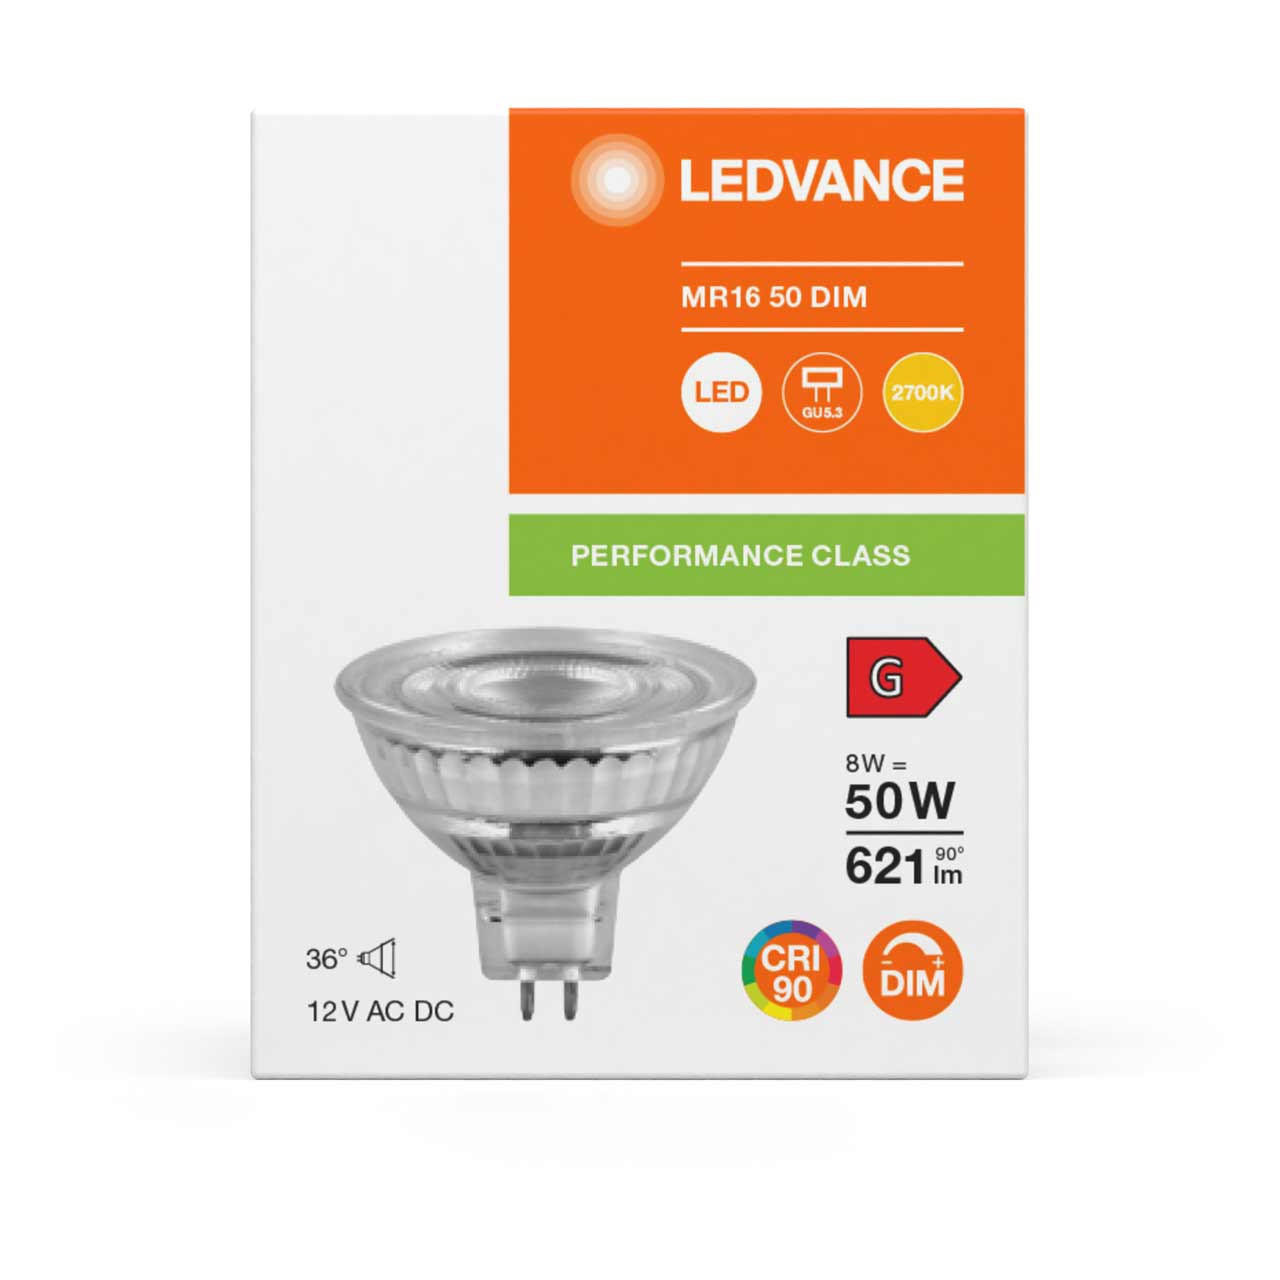 Ledvance LED MR16 Bulb 8W GU5.3 12V Dimmable Performance Class Warm White  36°